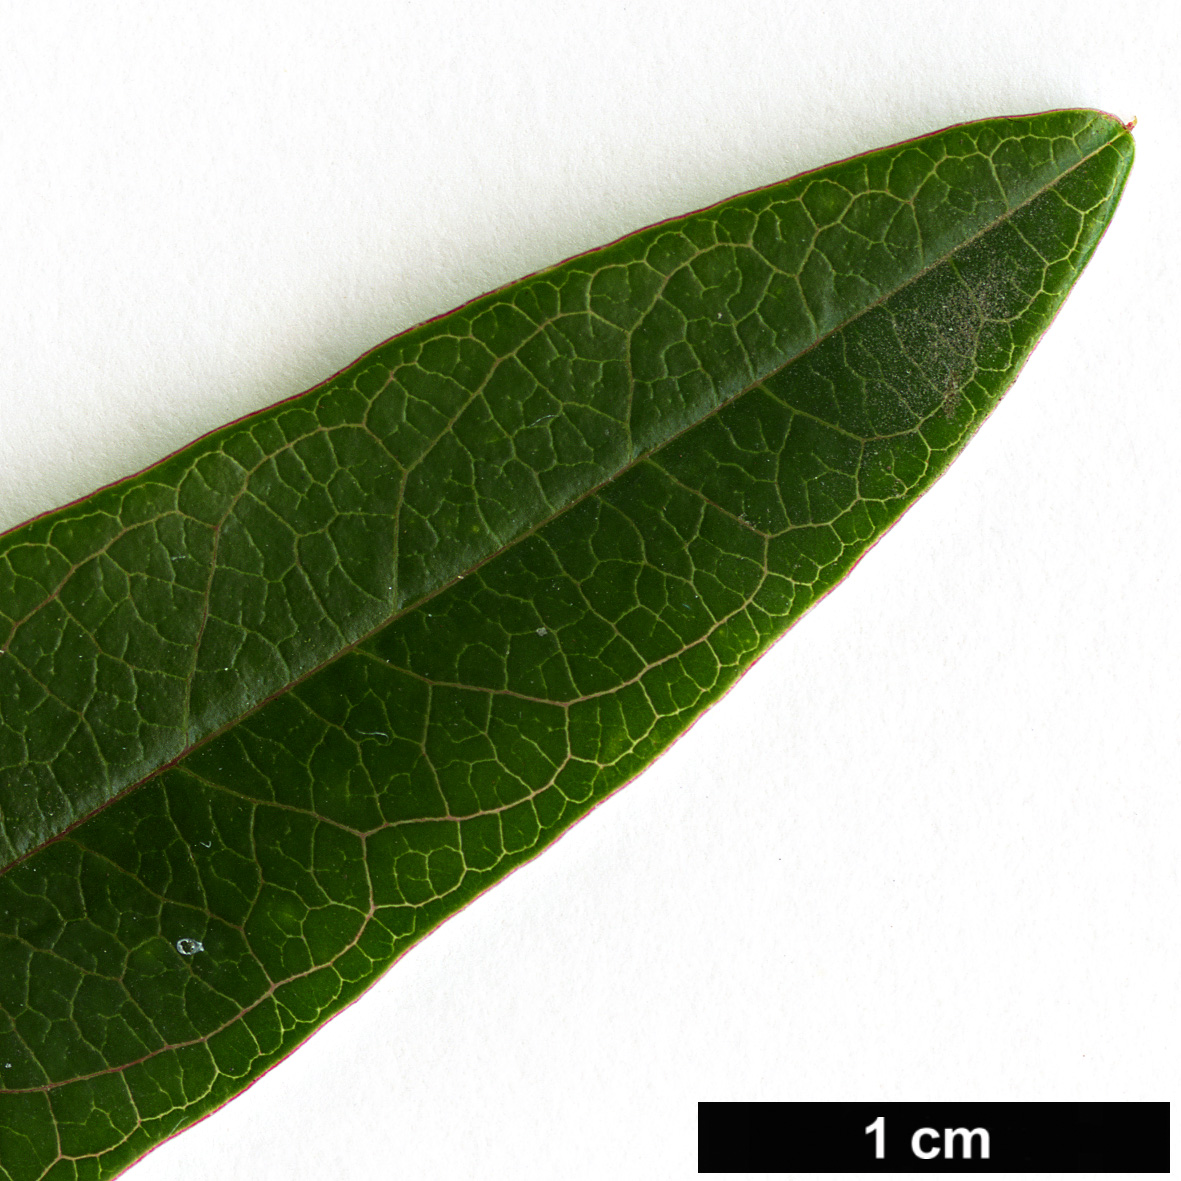 High resolution image: Family: Passifloraceae - Genus: Passiflora - Taxon: caerulea